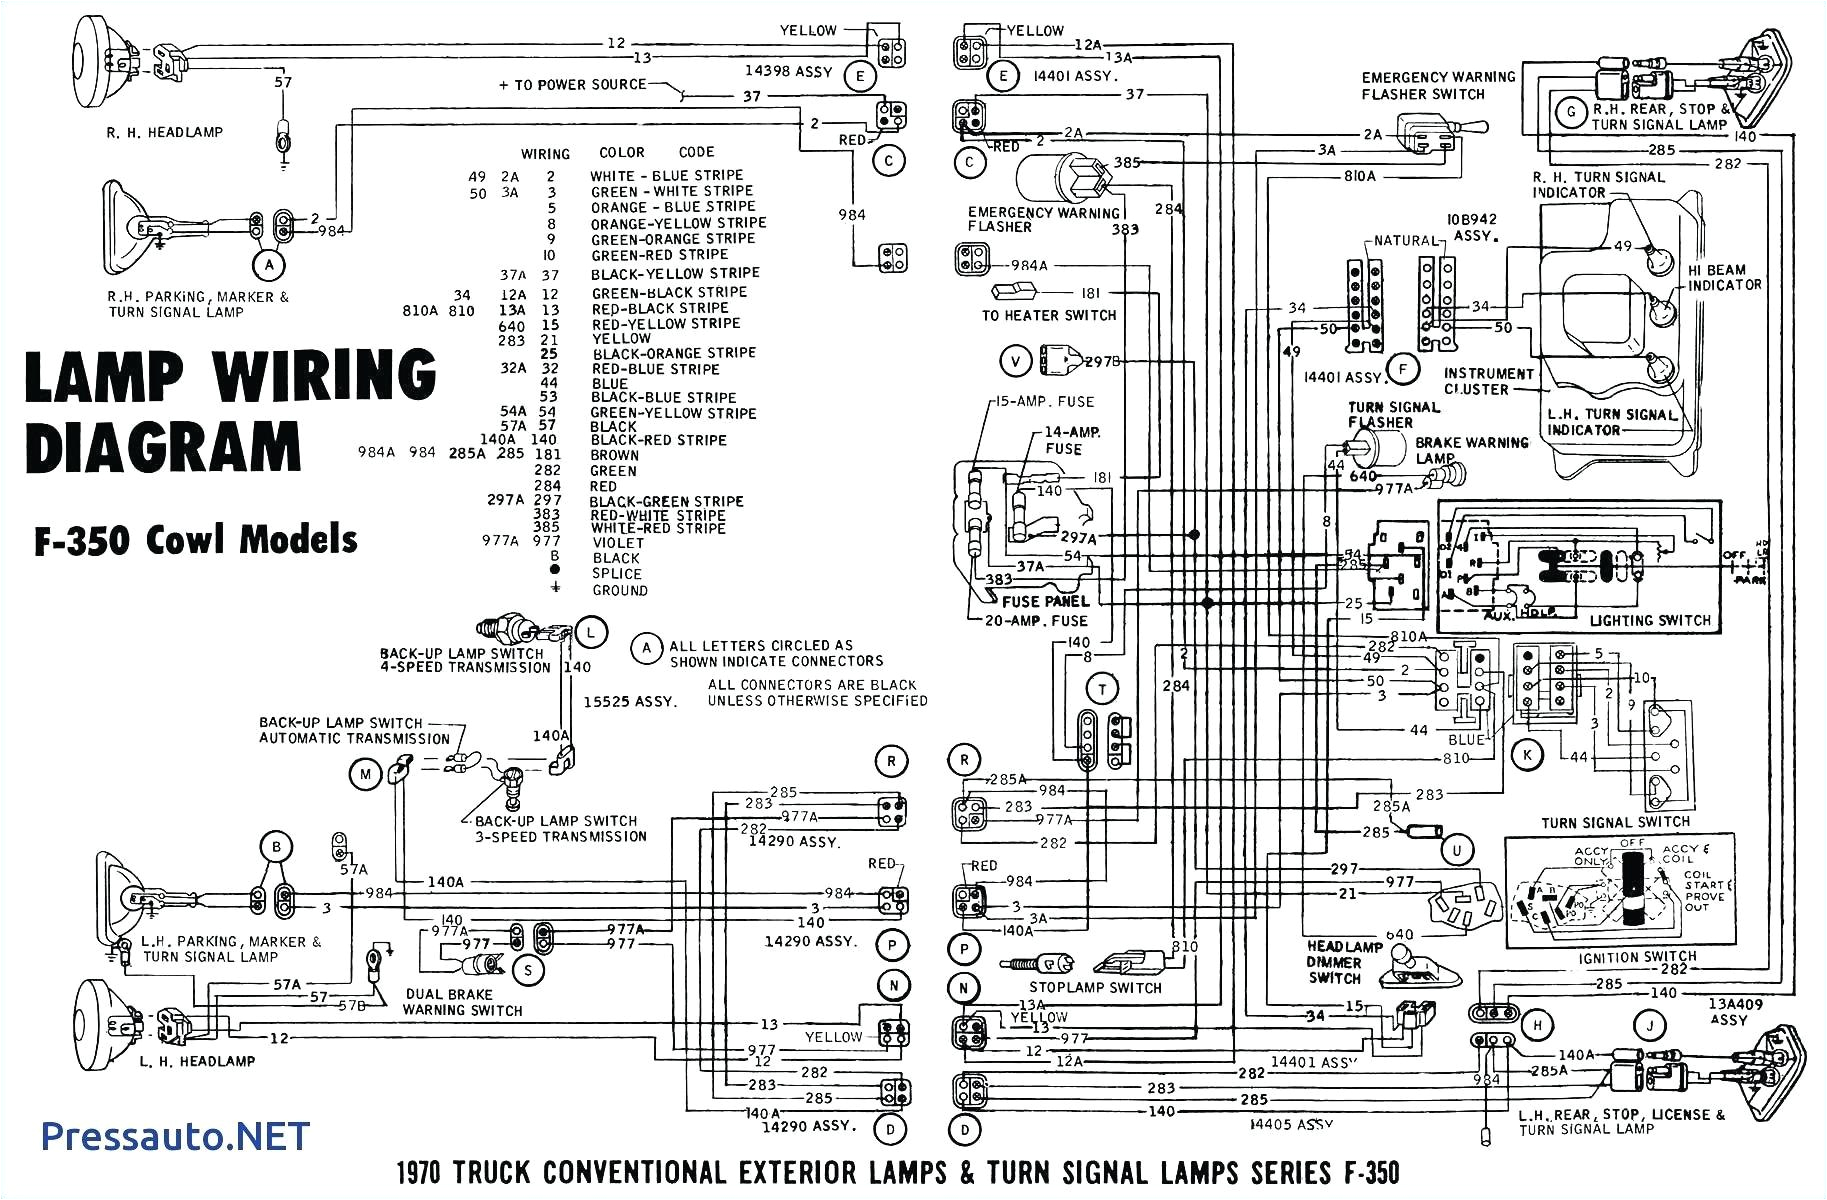 heat pump air handler electric heat wiring diagram wiring diagram wiring diagram for air handler